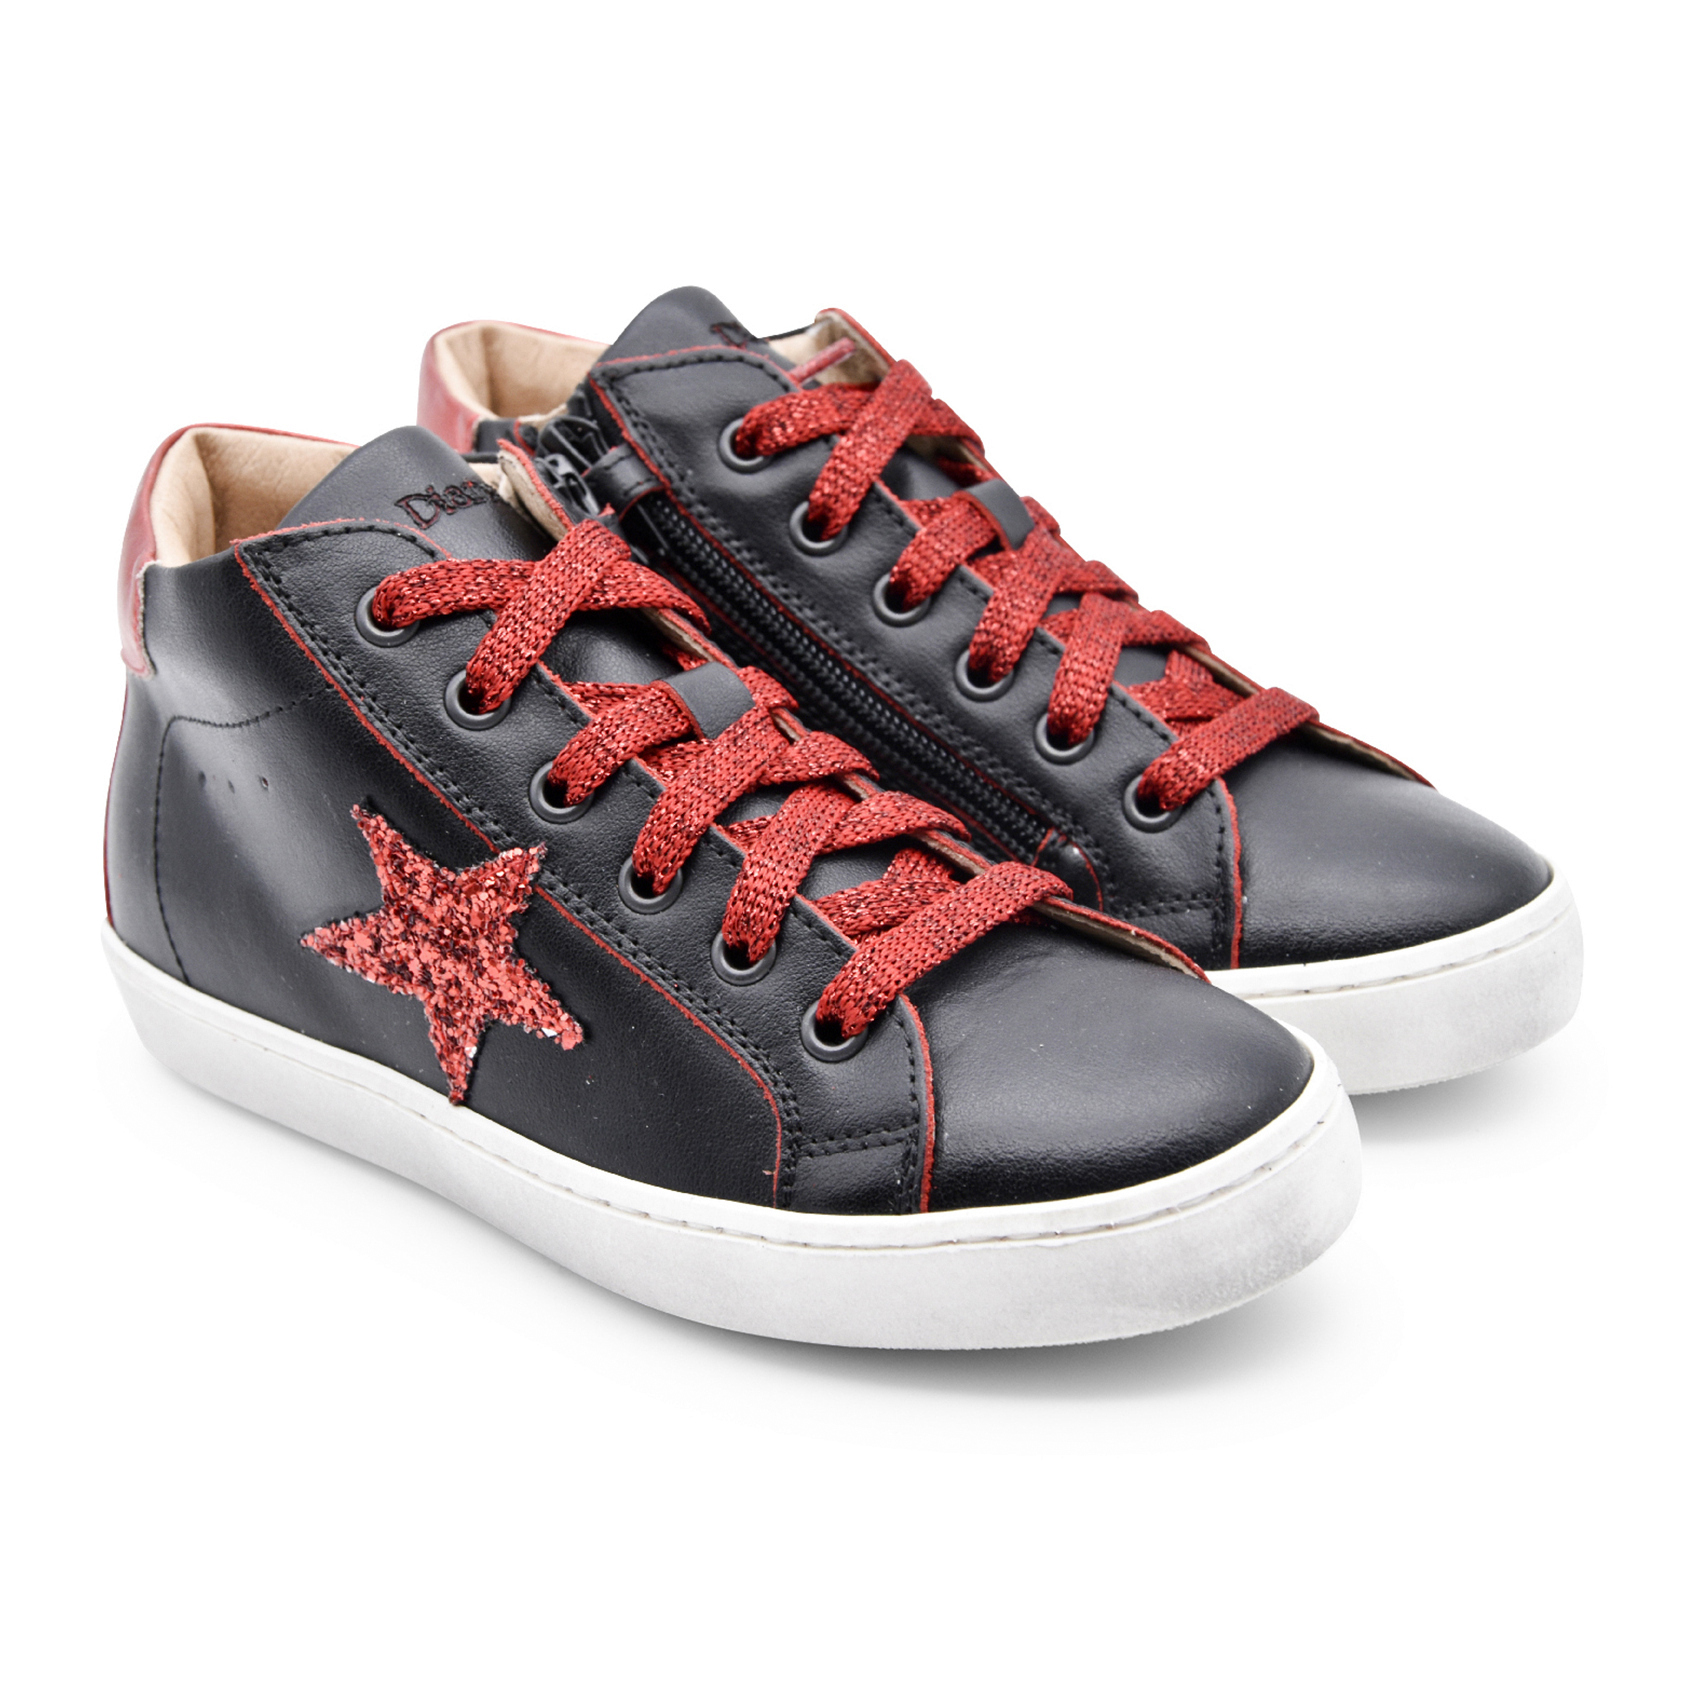 Dianetti Casual, sneakers, made in Italy, pelle, lacci, zip, nero, rosso glitter, fronte